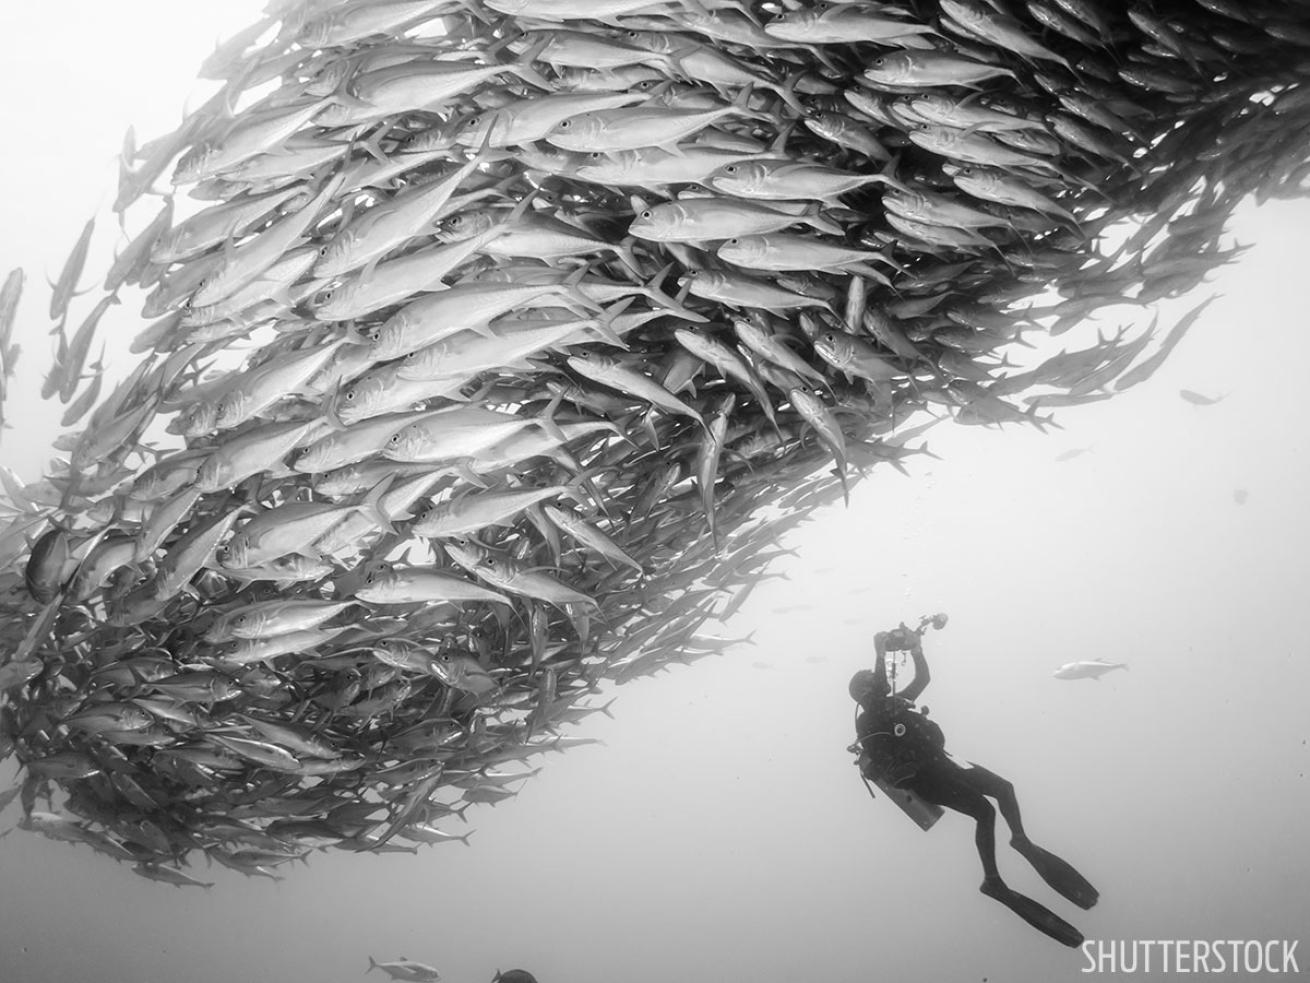 Mexico schooling fish underwater photo